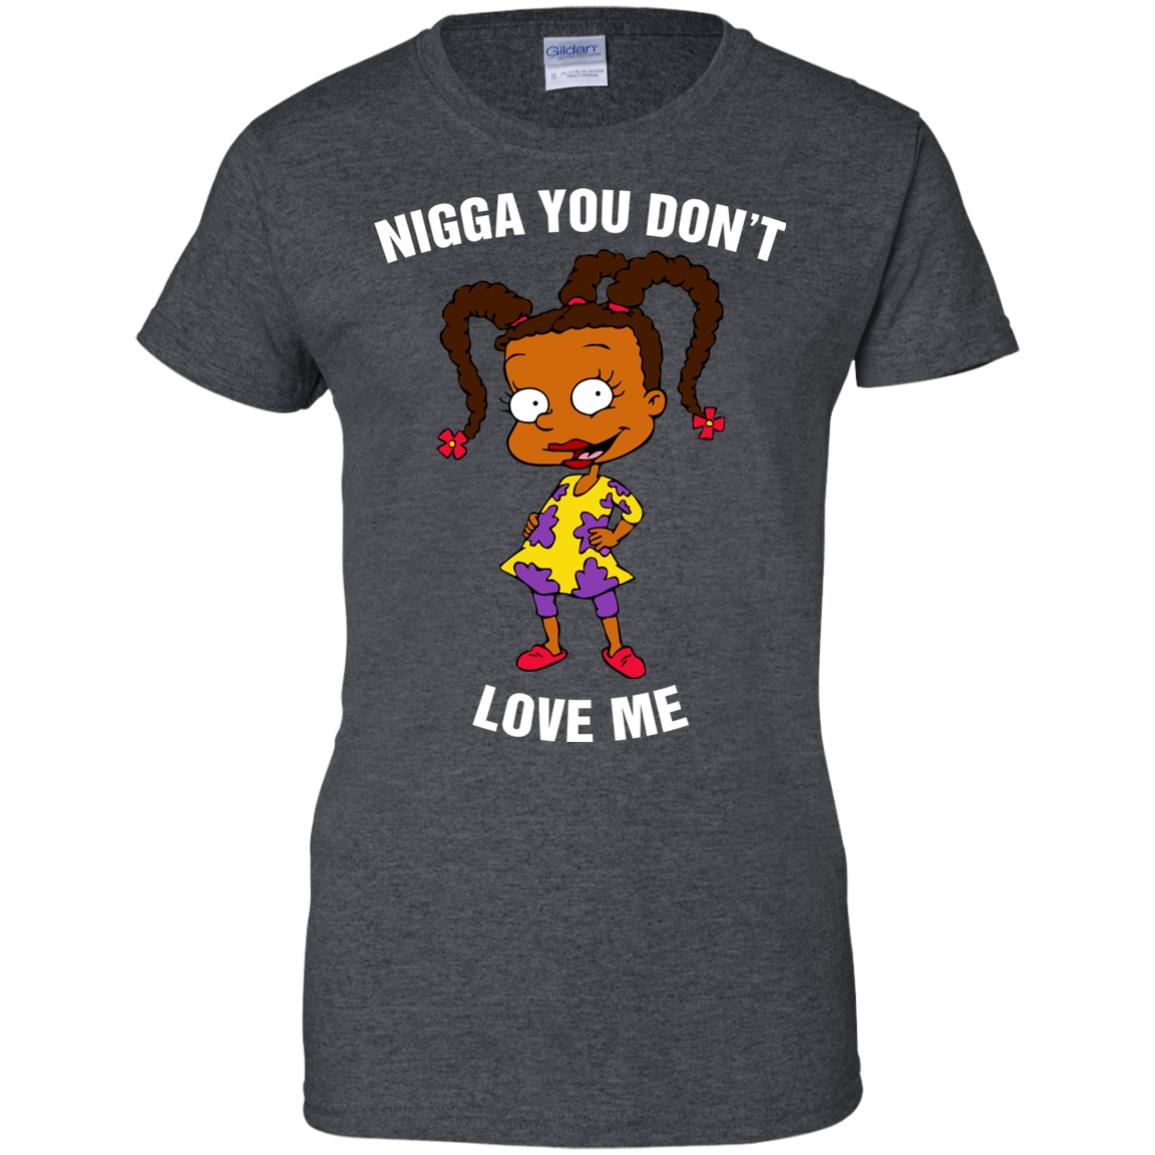 Susie Carmichael - Nigga You Don't Love Me t shirt, long ...